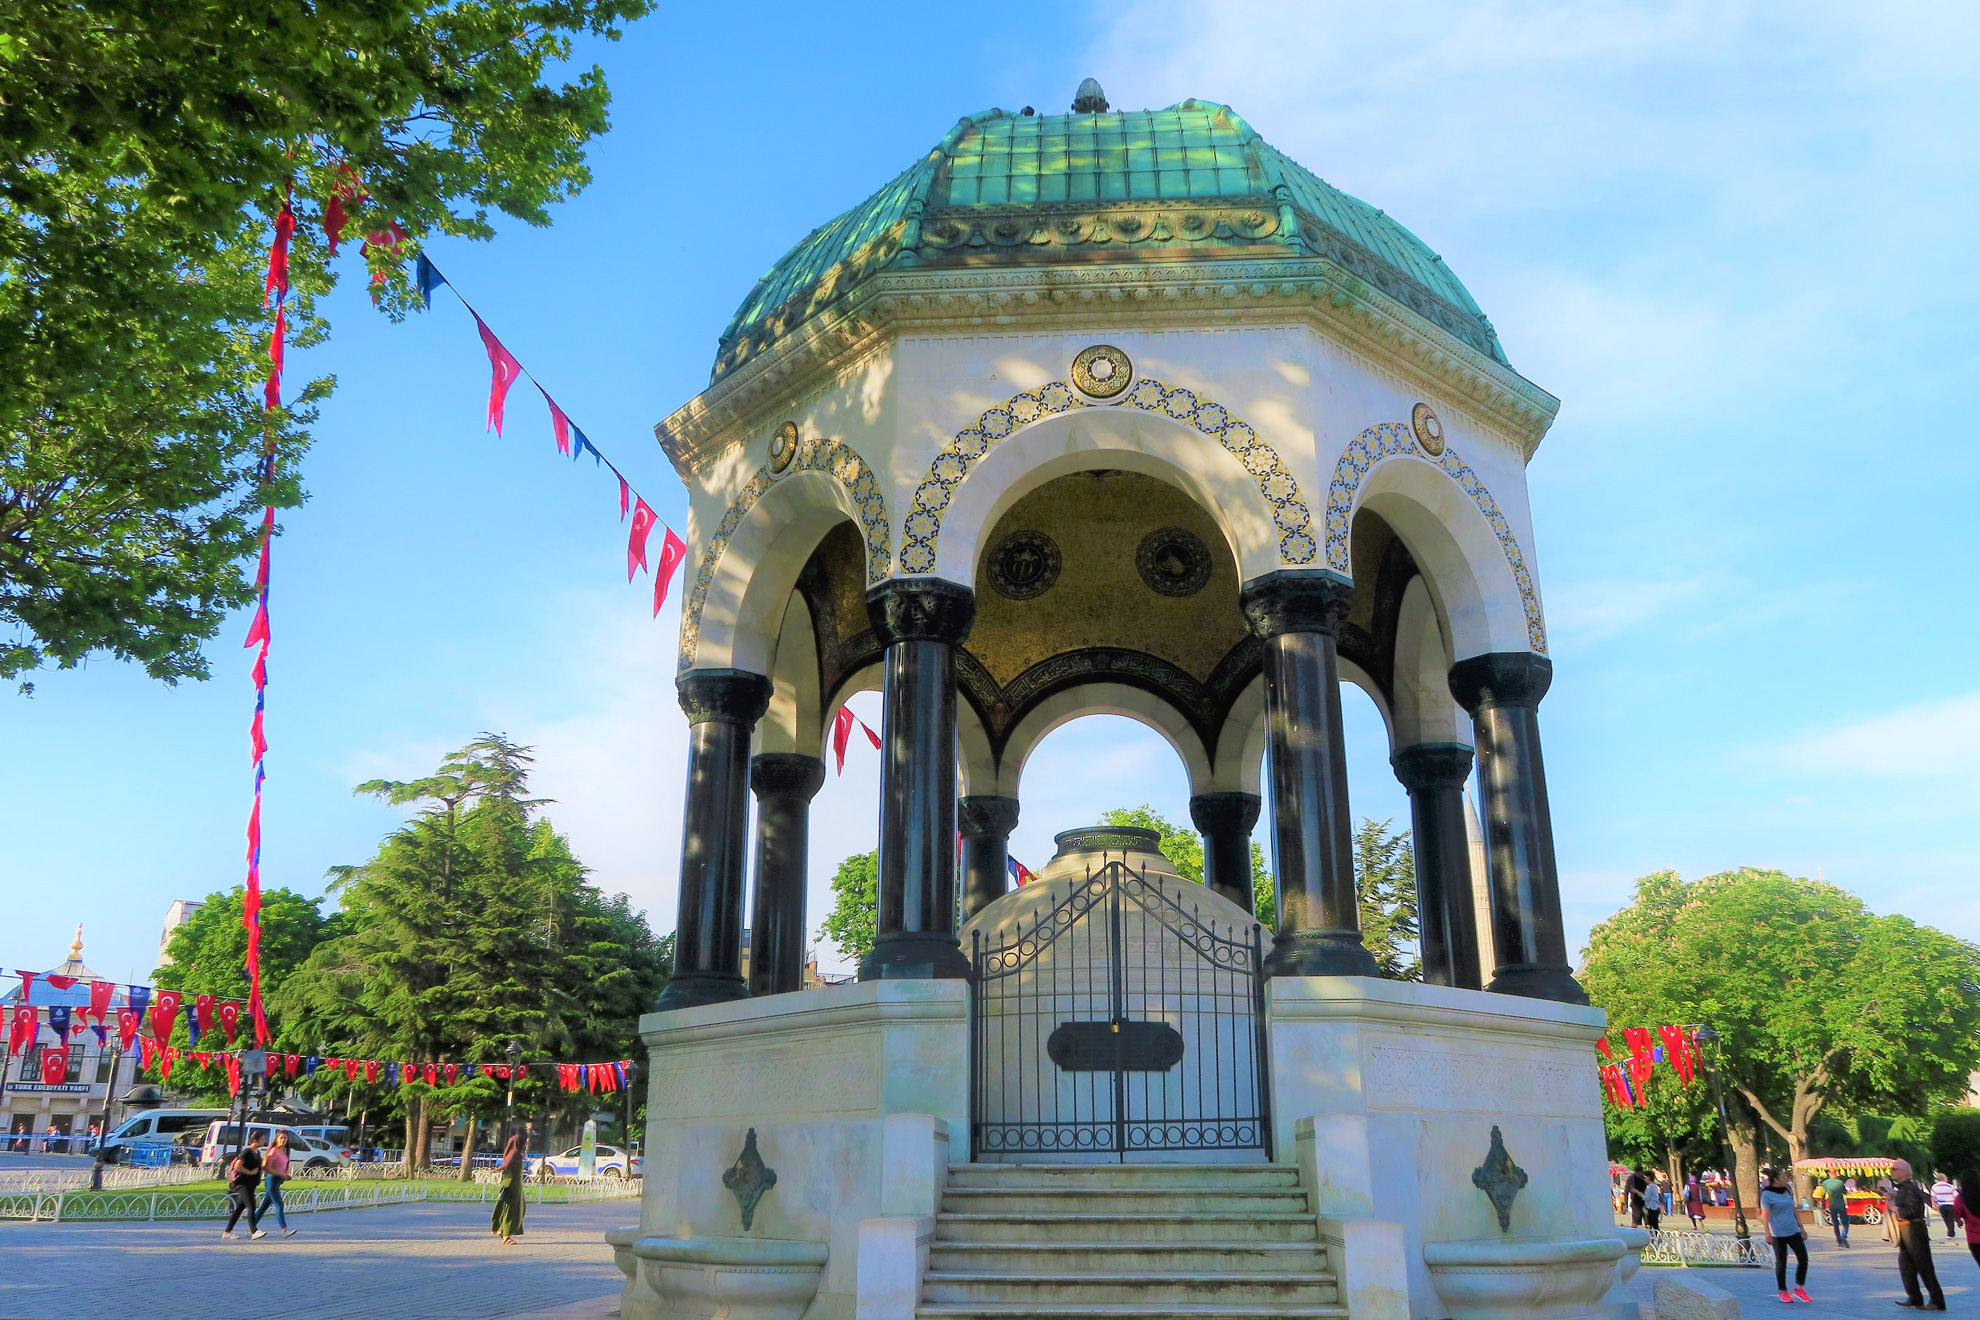 Великден и Светите места в Истанбул, 3 нощувки - Фонтана на Вилхелм II, Истанбул, Турция - The Fountain of Wilhelm II, Istanbul, Turkey